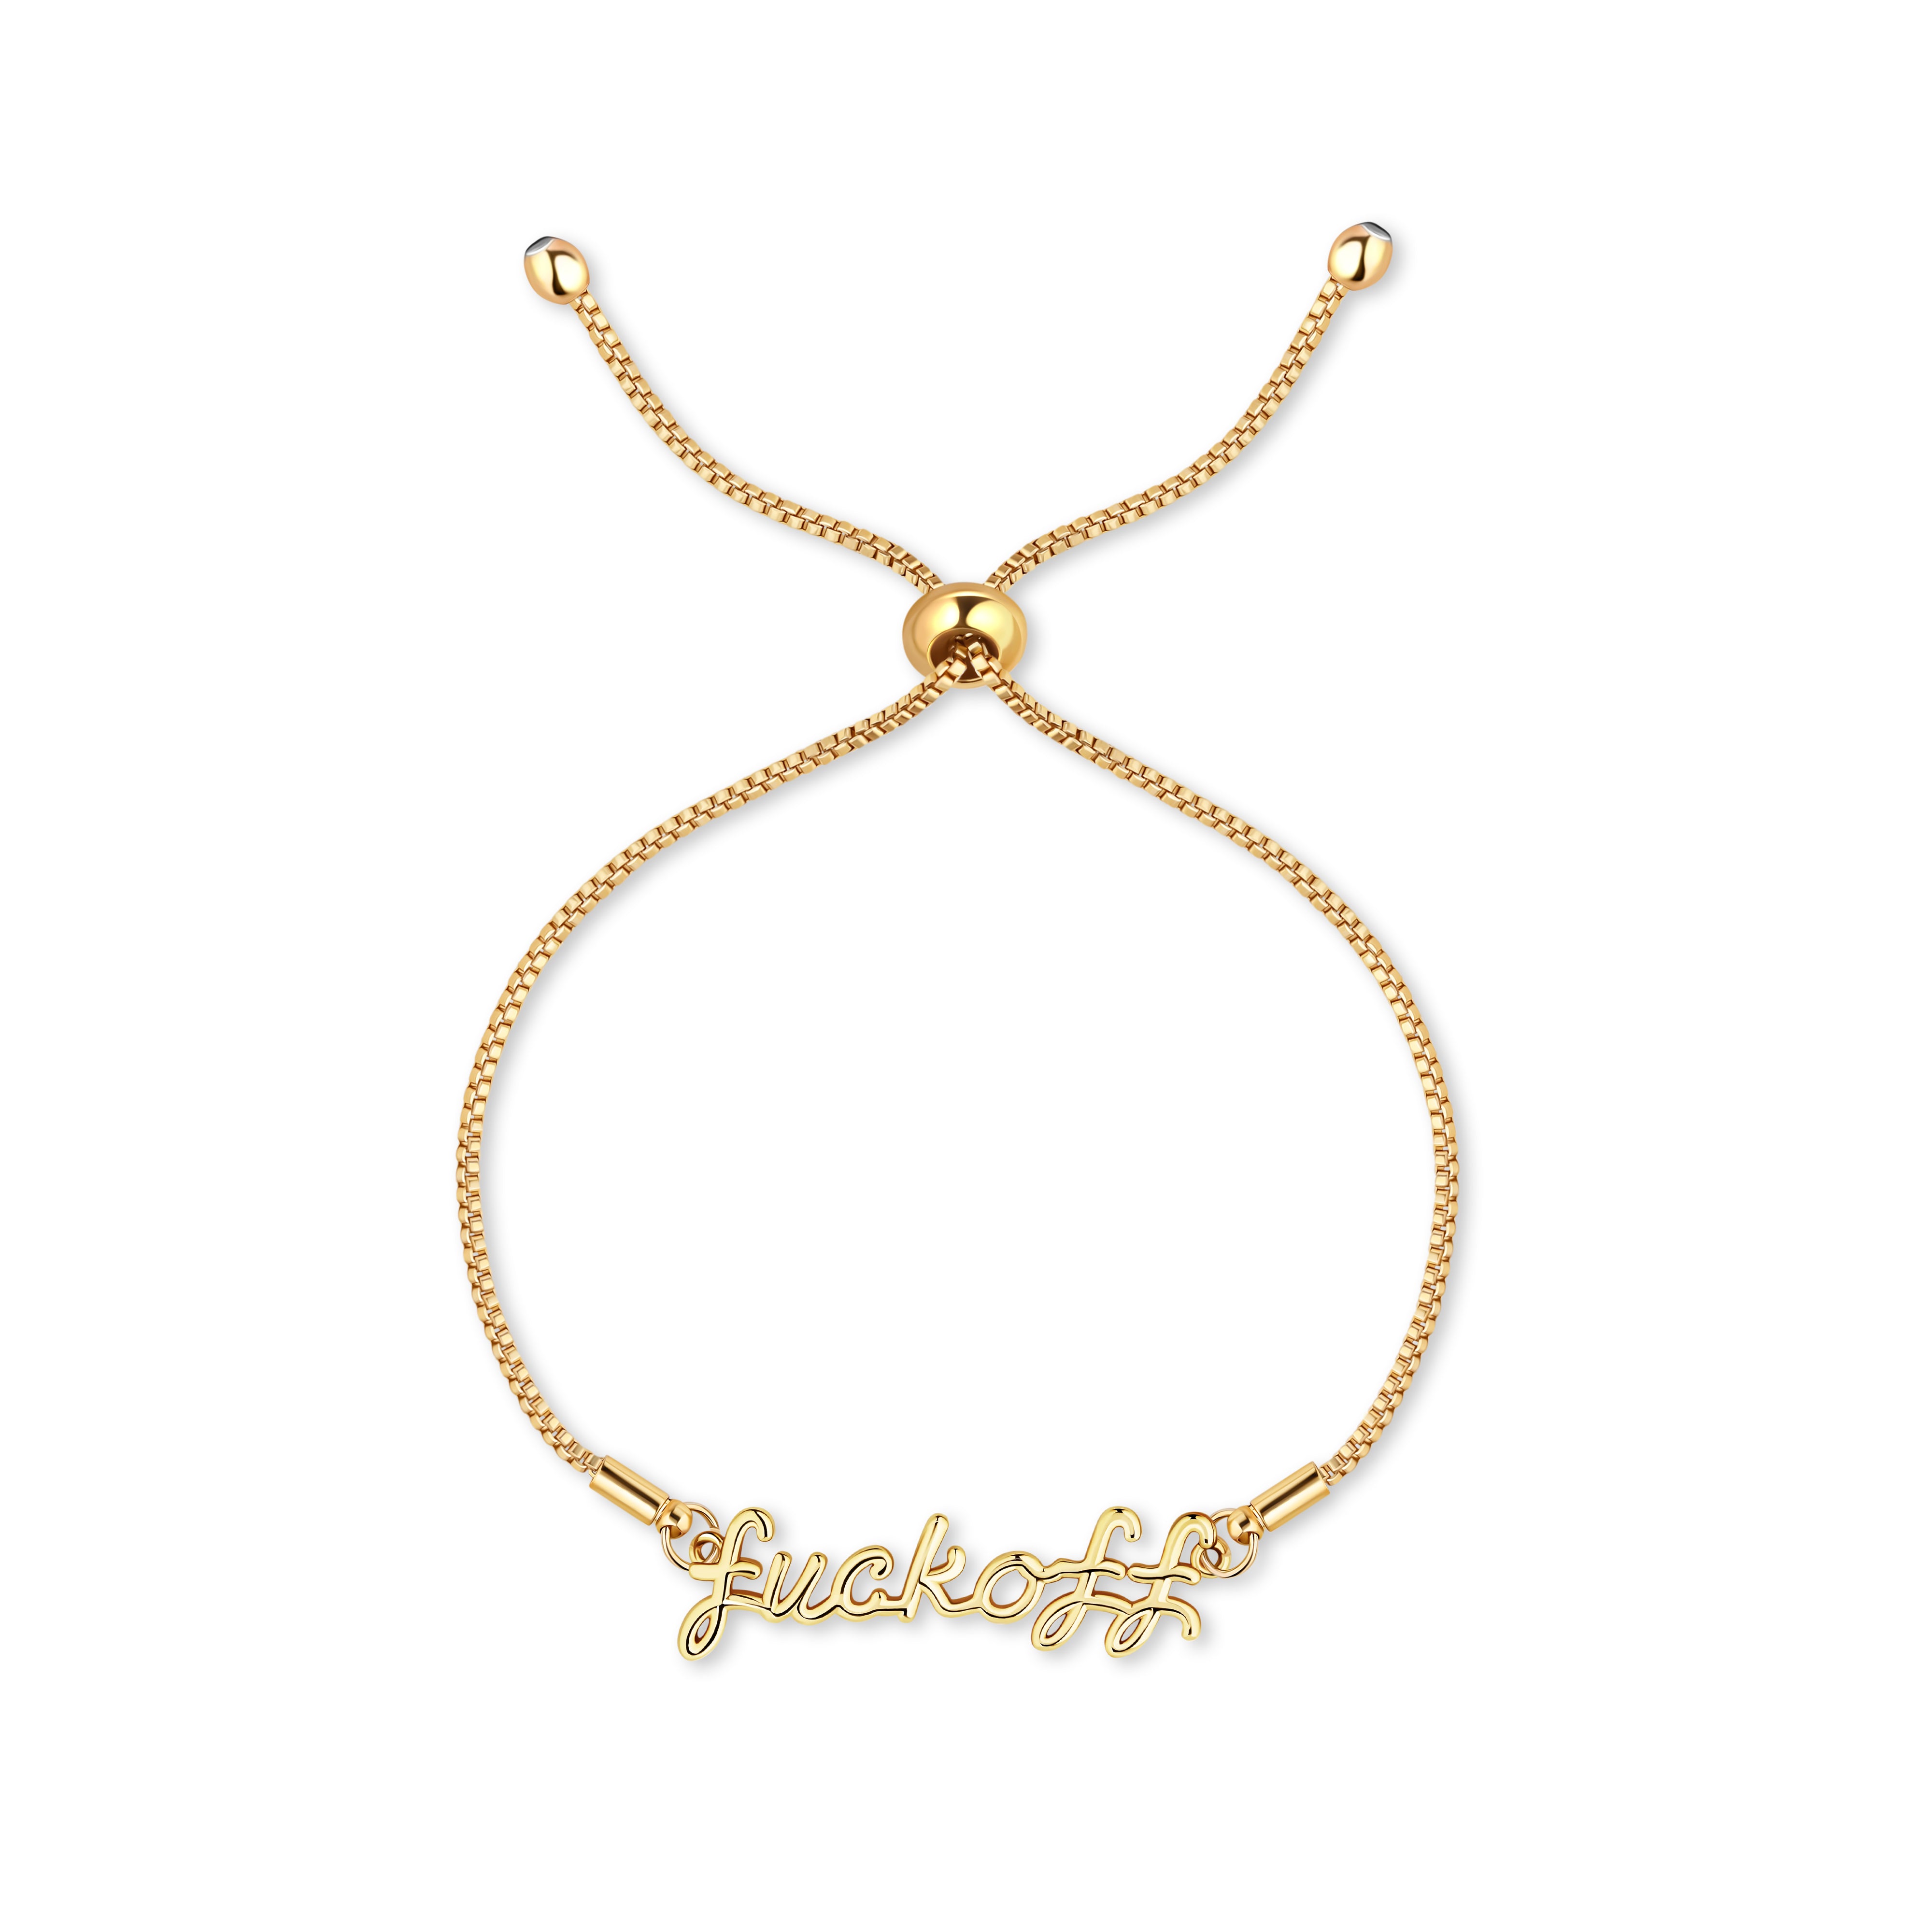 Buy the Crystal Adjustable Gold Tennis Bracelet | JaeBee Jewelry